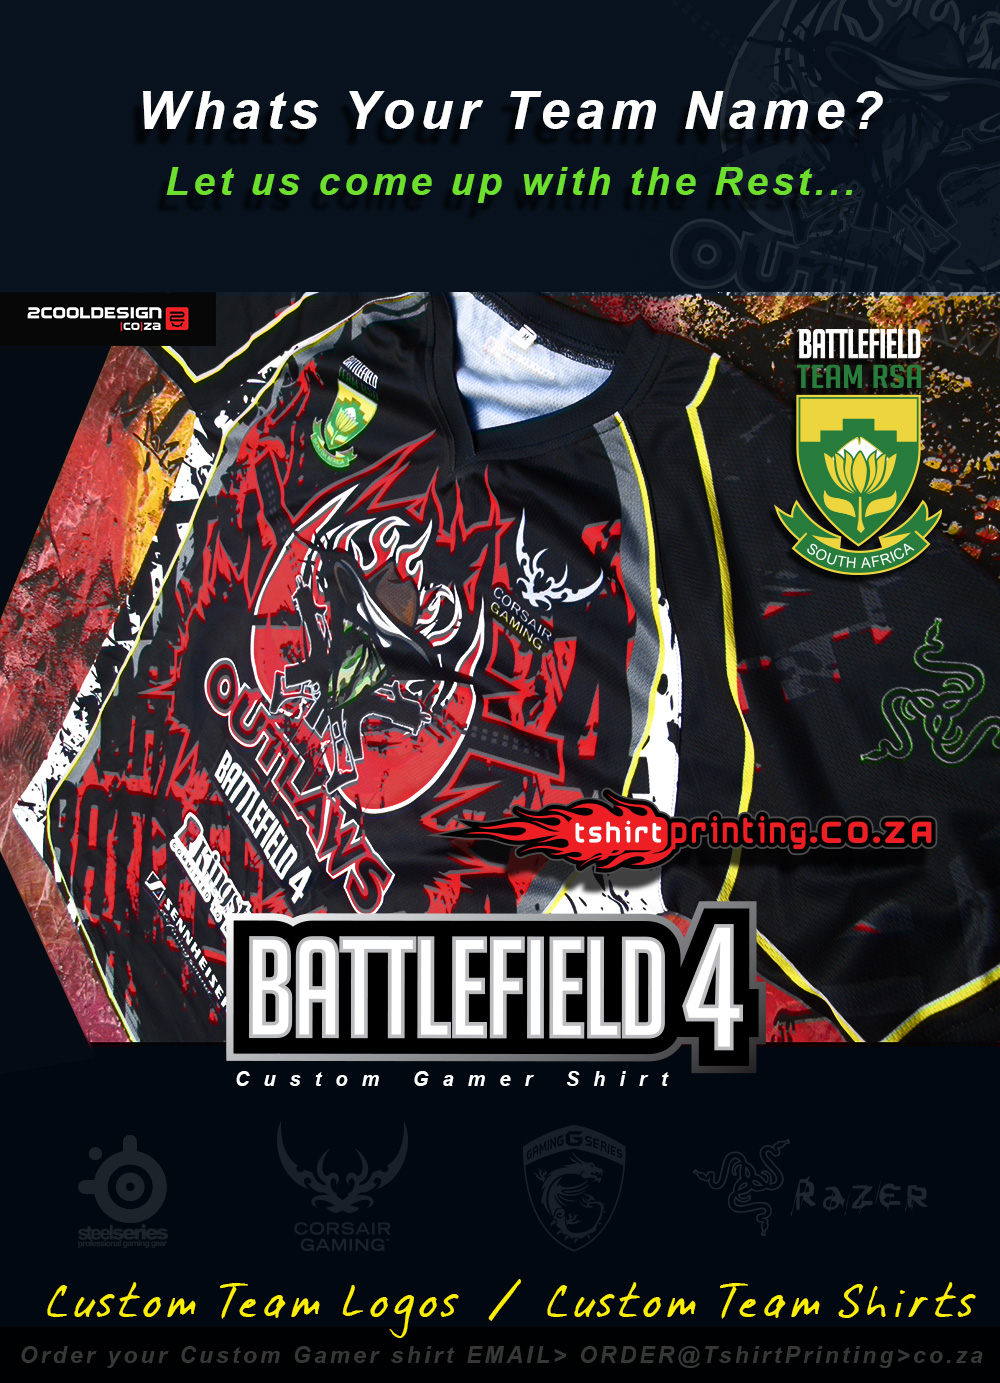 Battlefield-gamer-shirt-custom-team-shirt-logo-custom-all-over-print-gamer-shirt